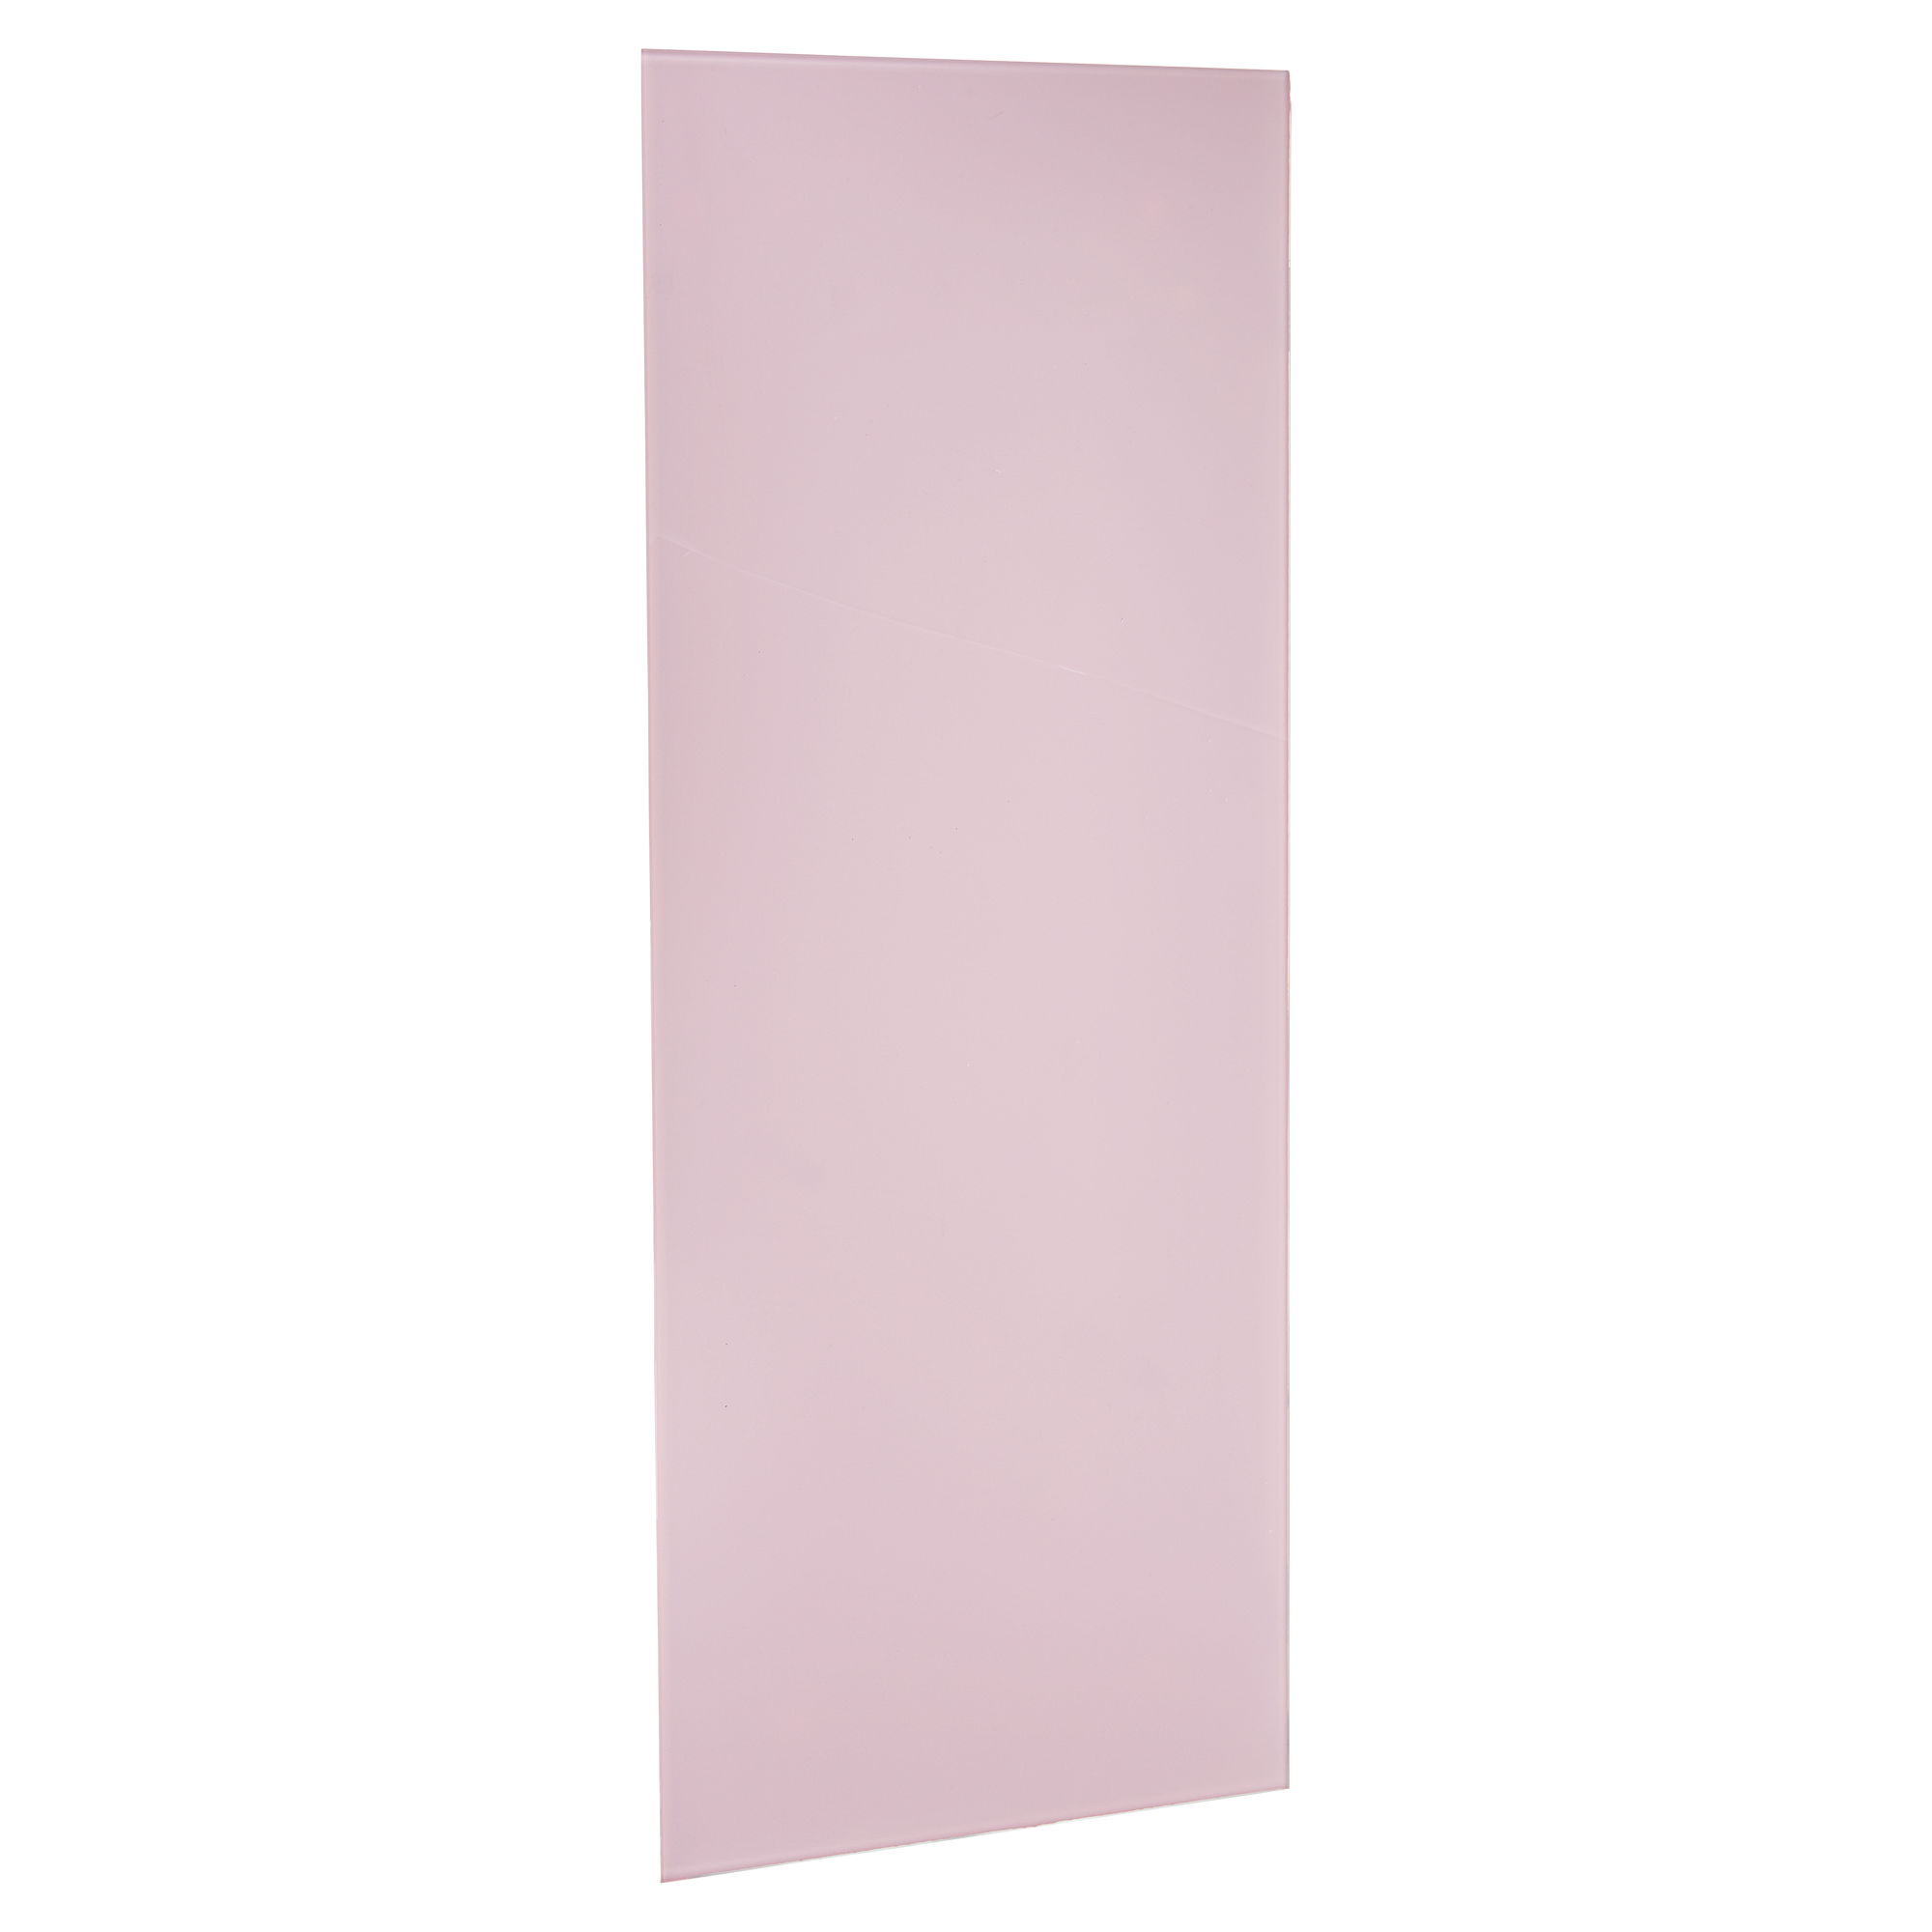 Memoboard beschreibbar rosa 80 x 30 cm + product picture